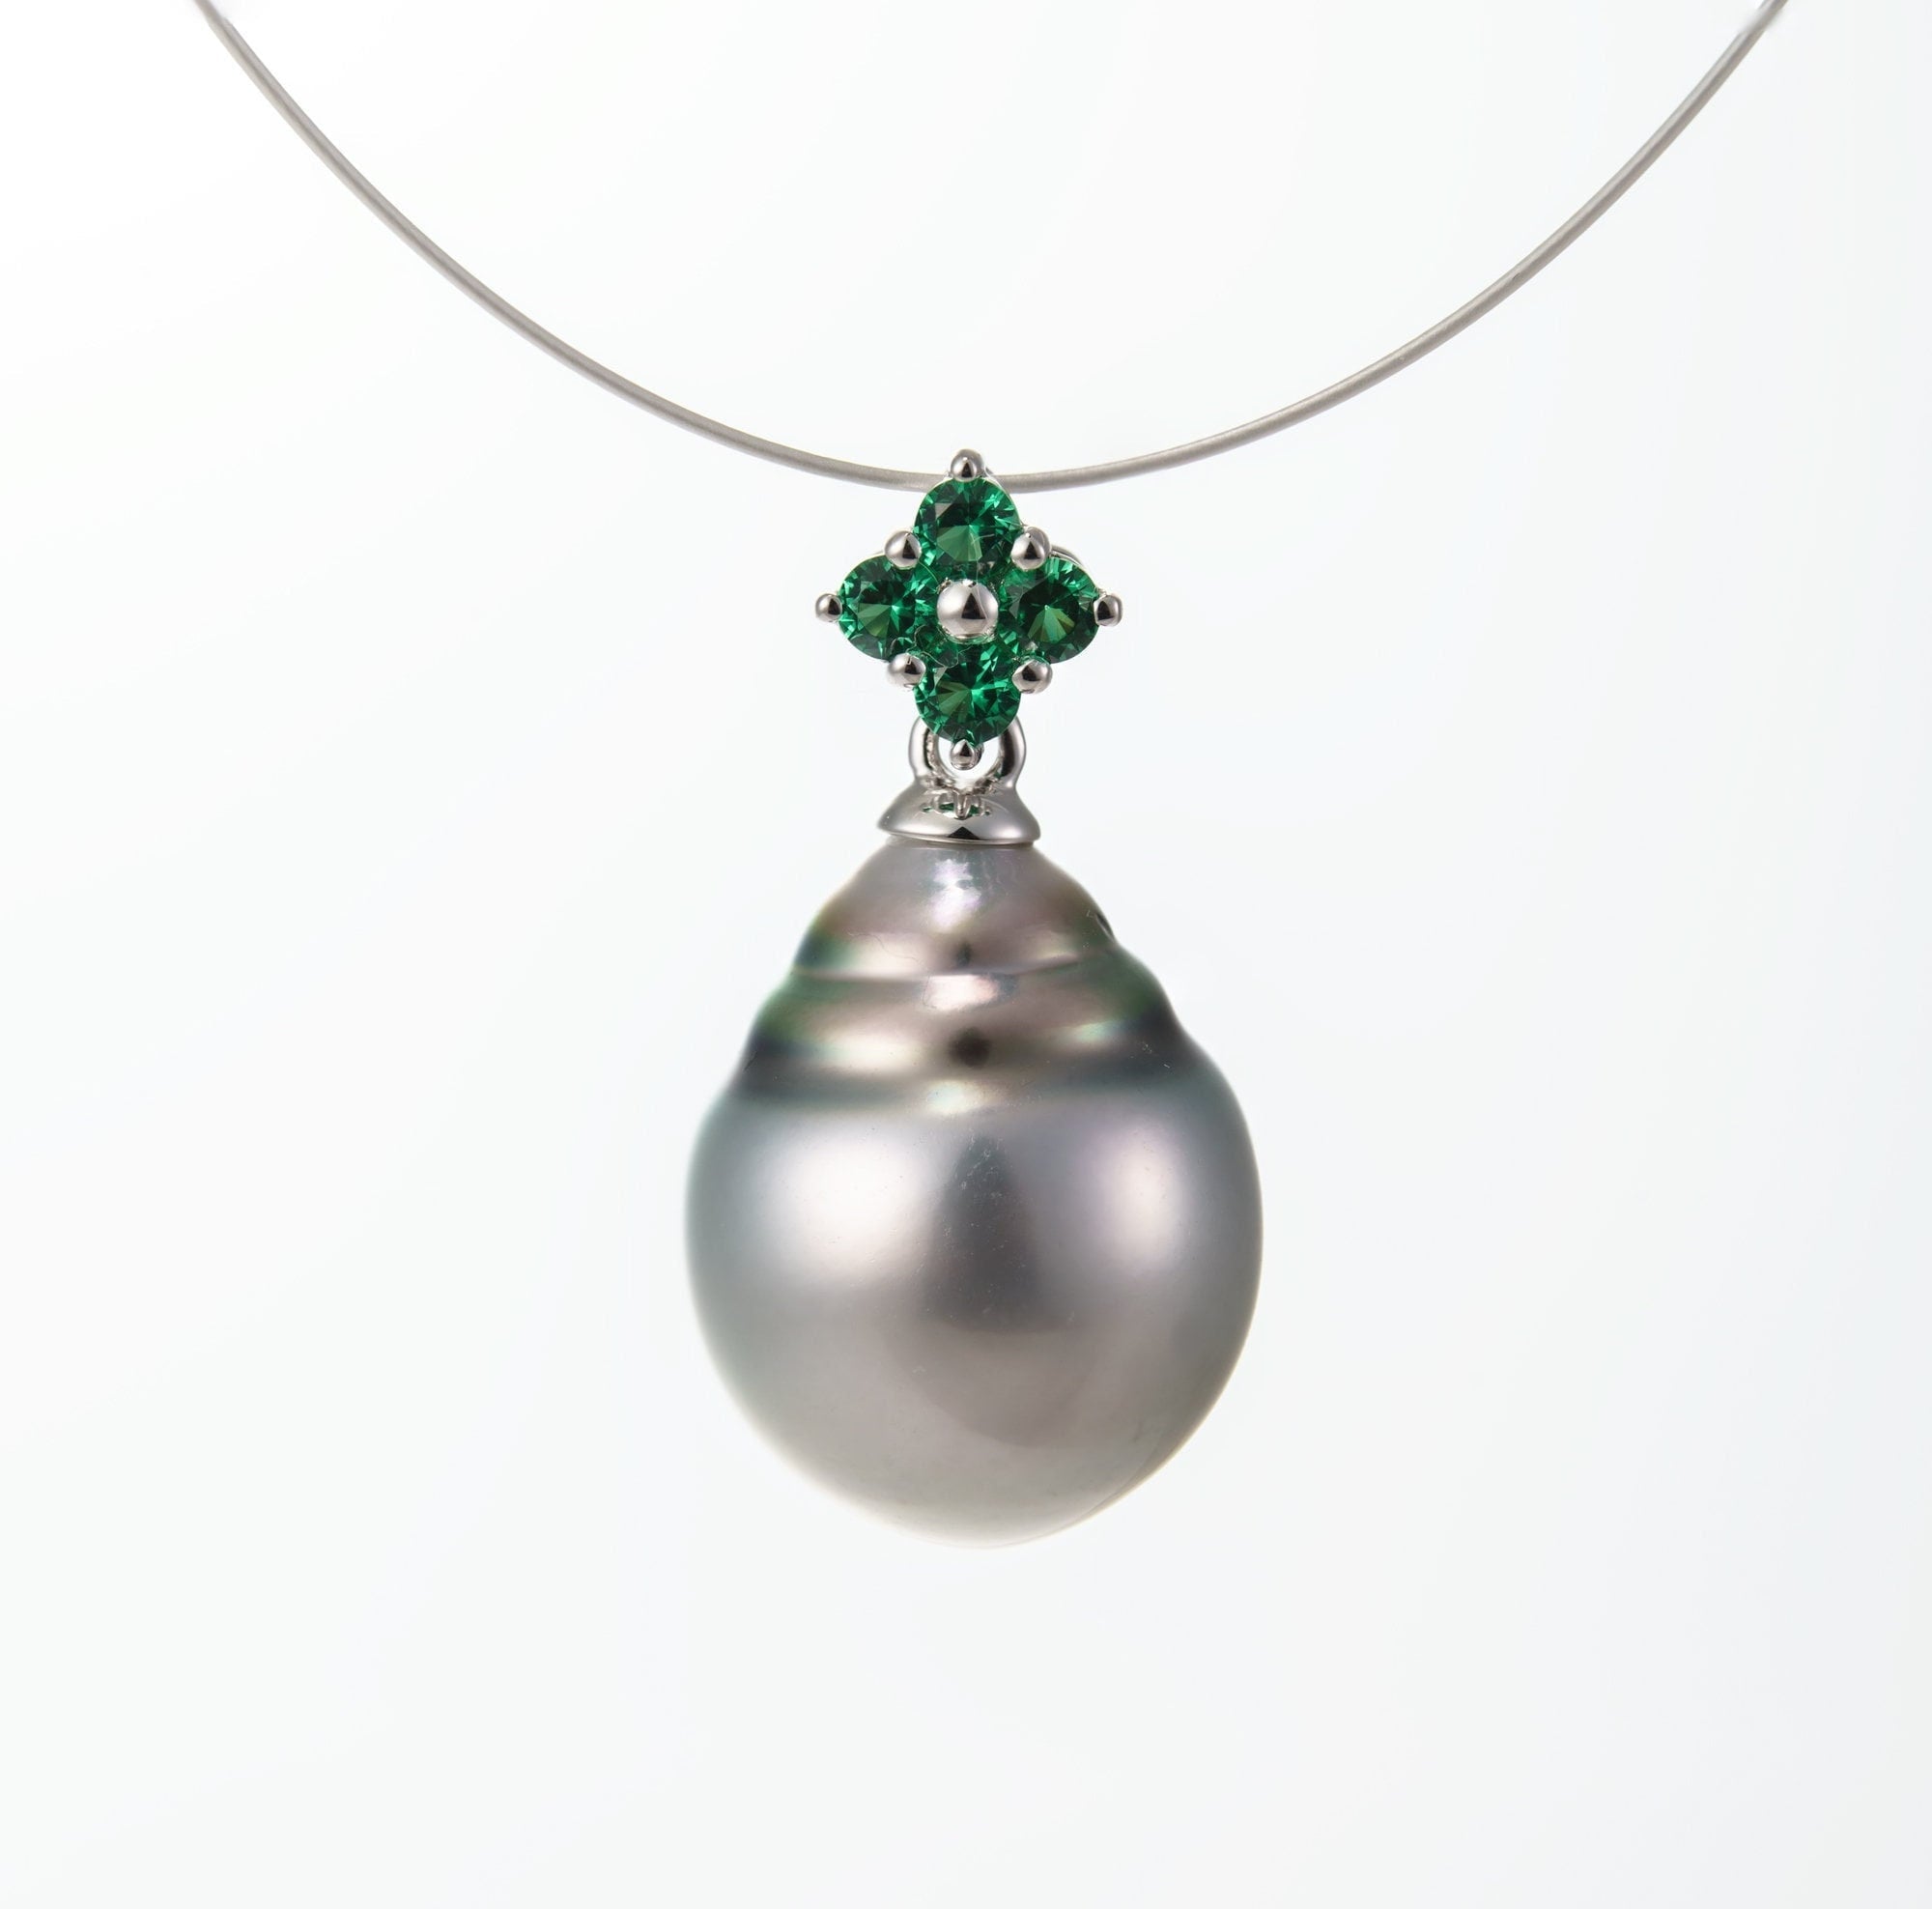 11mm tahitian pearl pendant, 925 sterling silver, rhodium finish, cubic zirconia